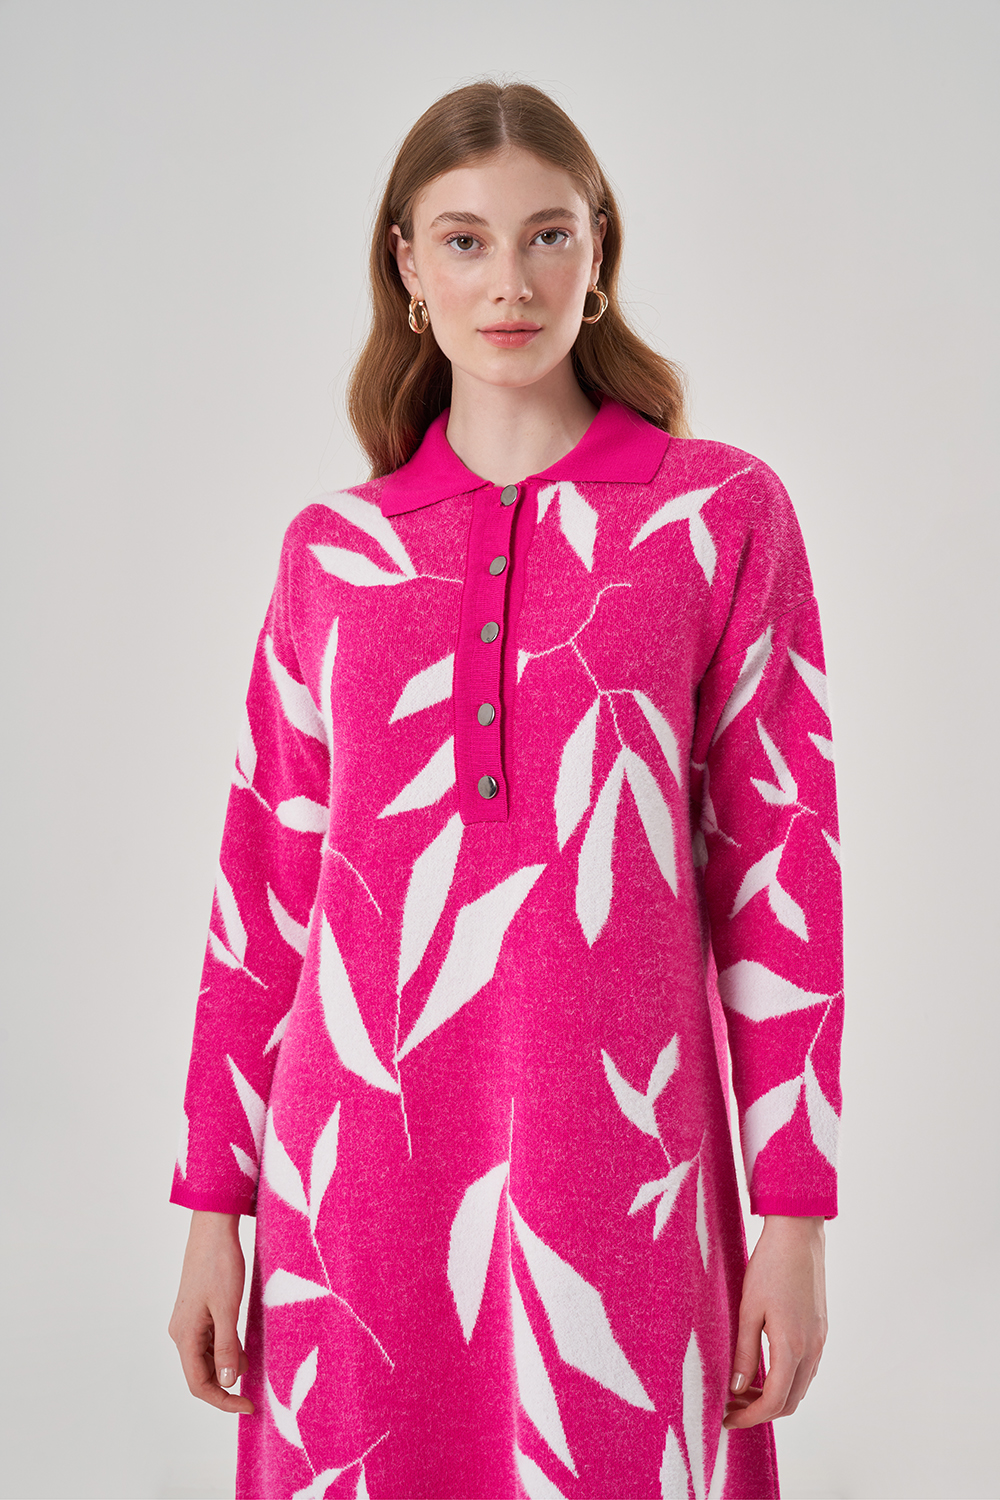 Special Patterned Soft Fuchsia Knitwear Dress